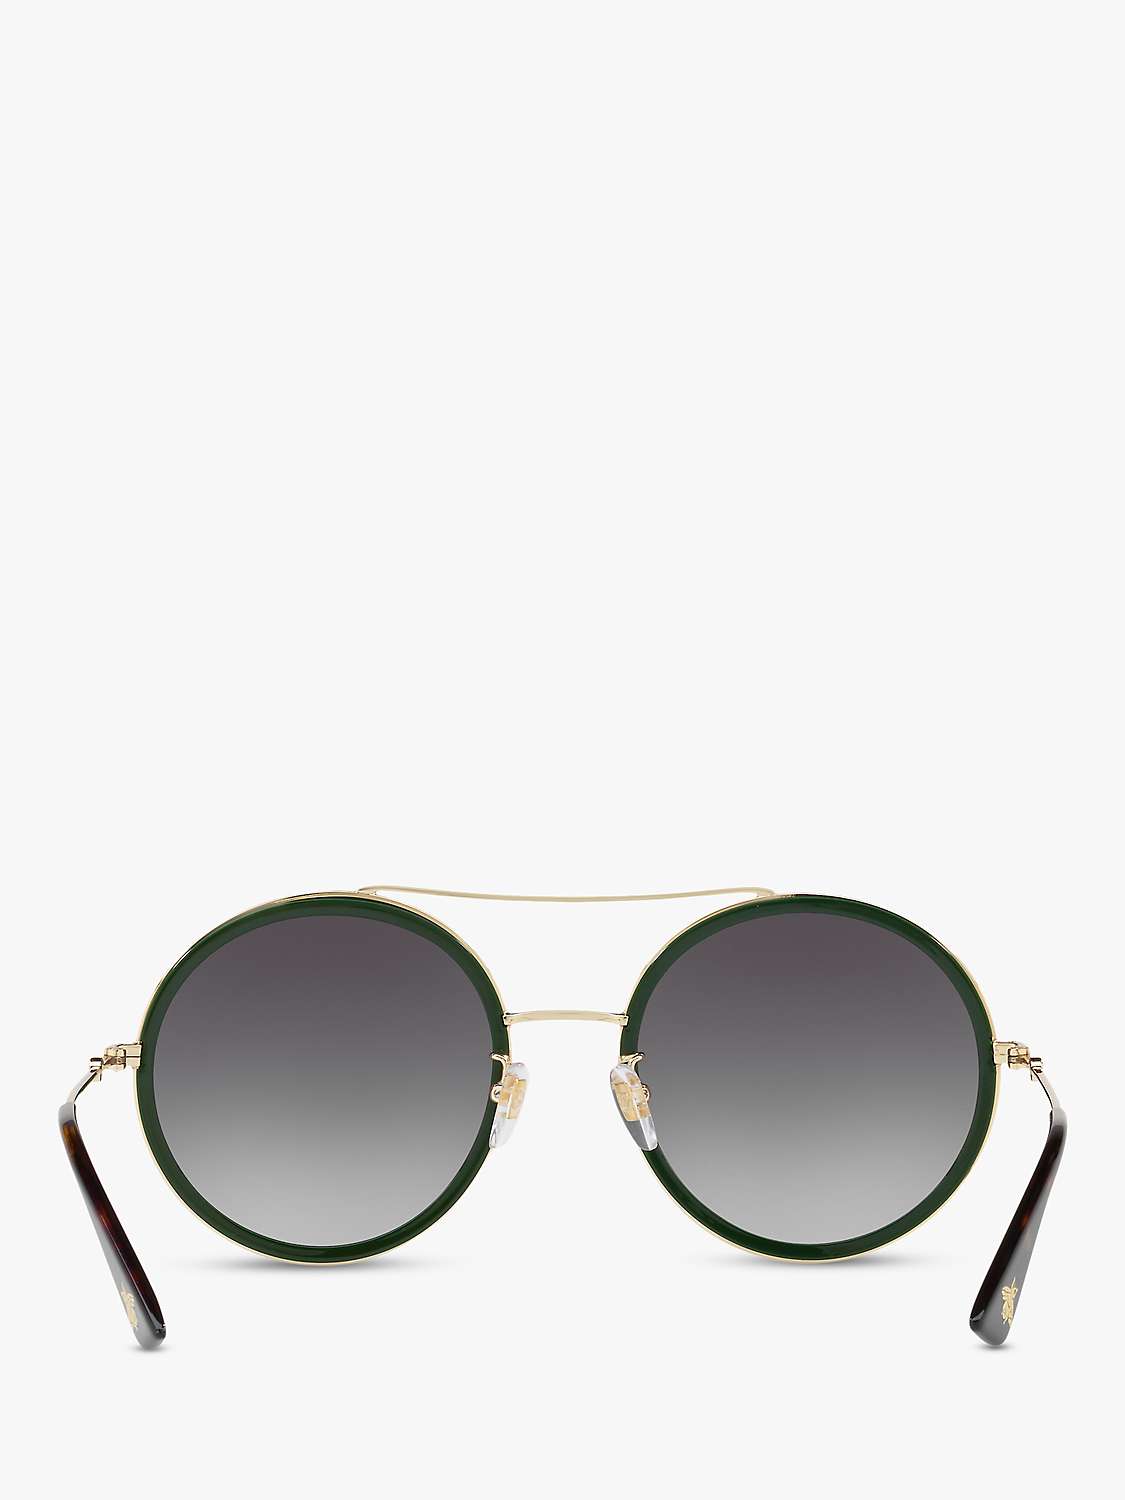 Buy Gucci GG0061S Women's Polarised Round Sunglasses, Gold/Grey Gradient Online at johnlewis.com